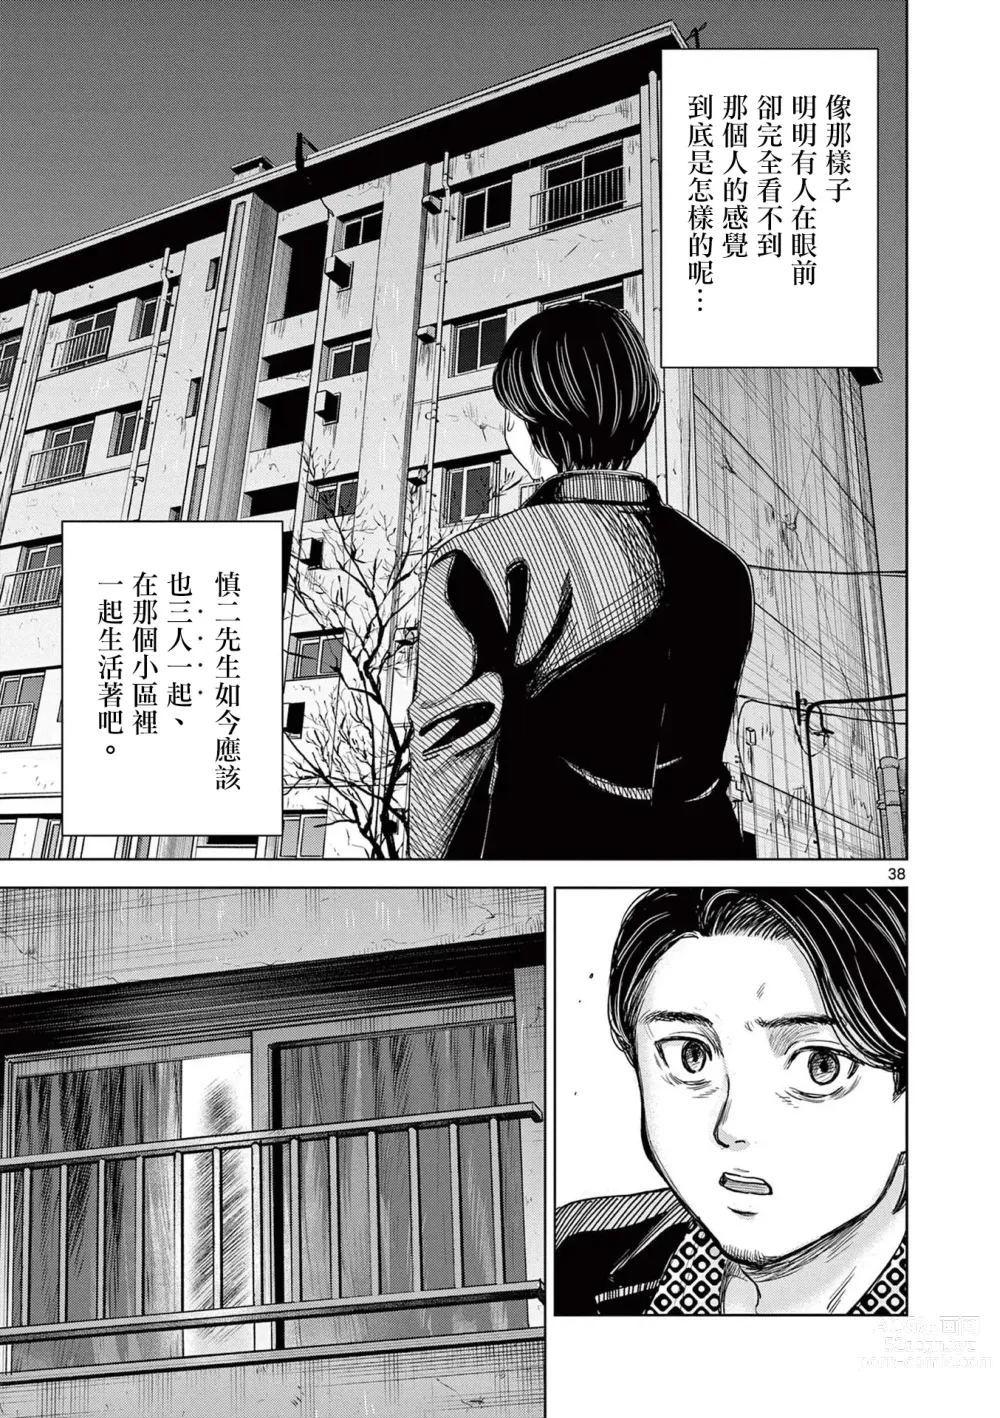 Page 44 of manga Iyadan Yobanashi Chinese]